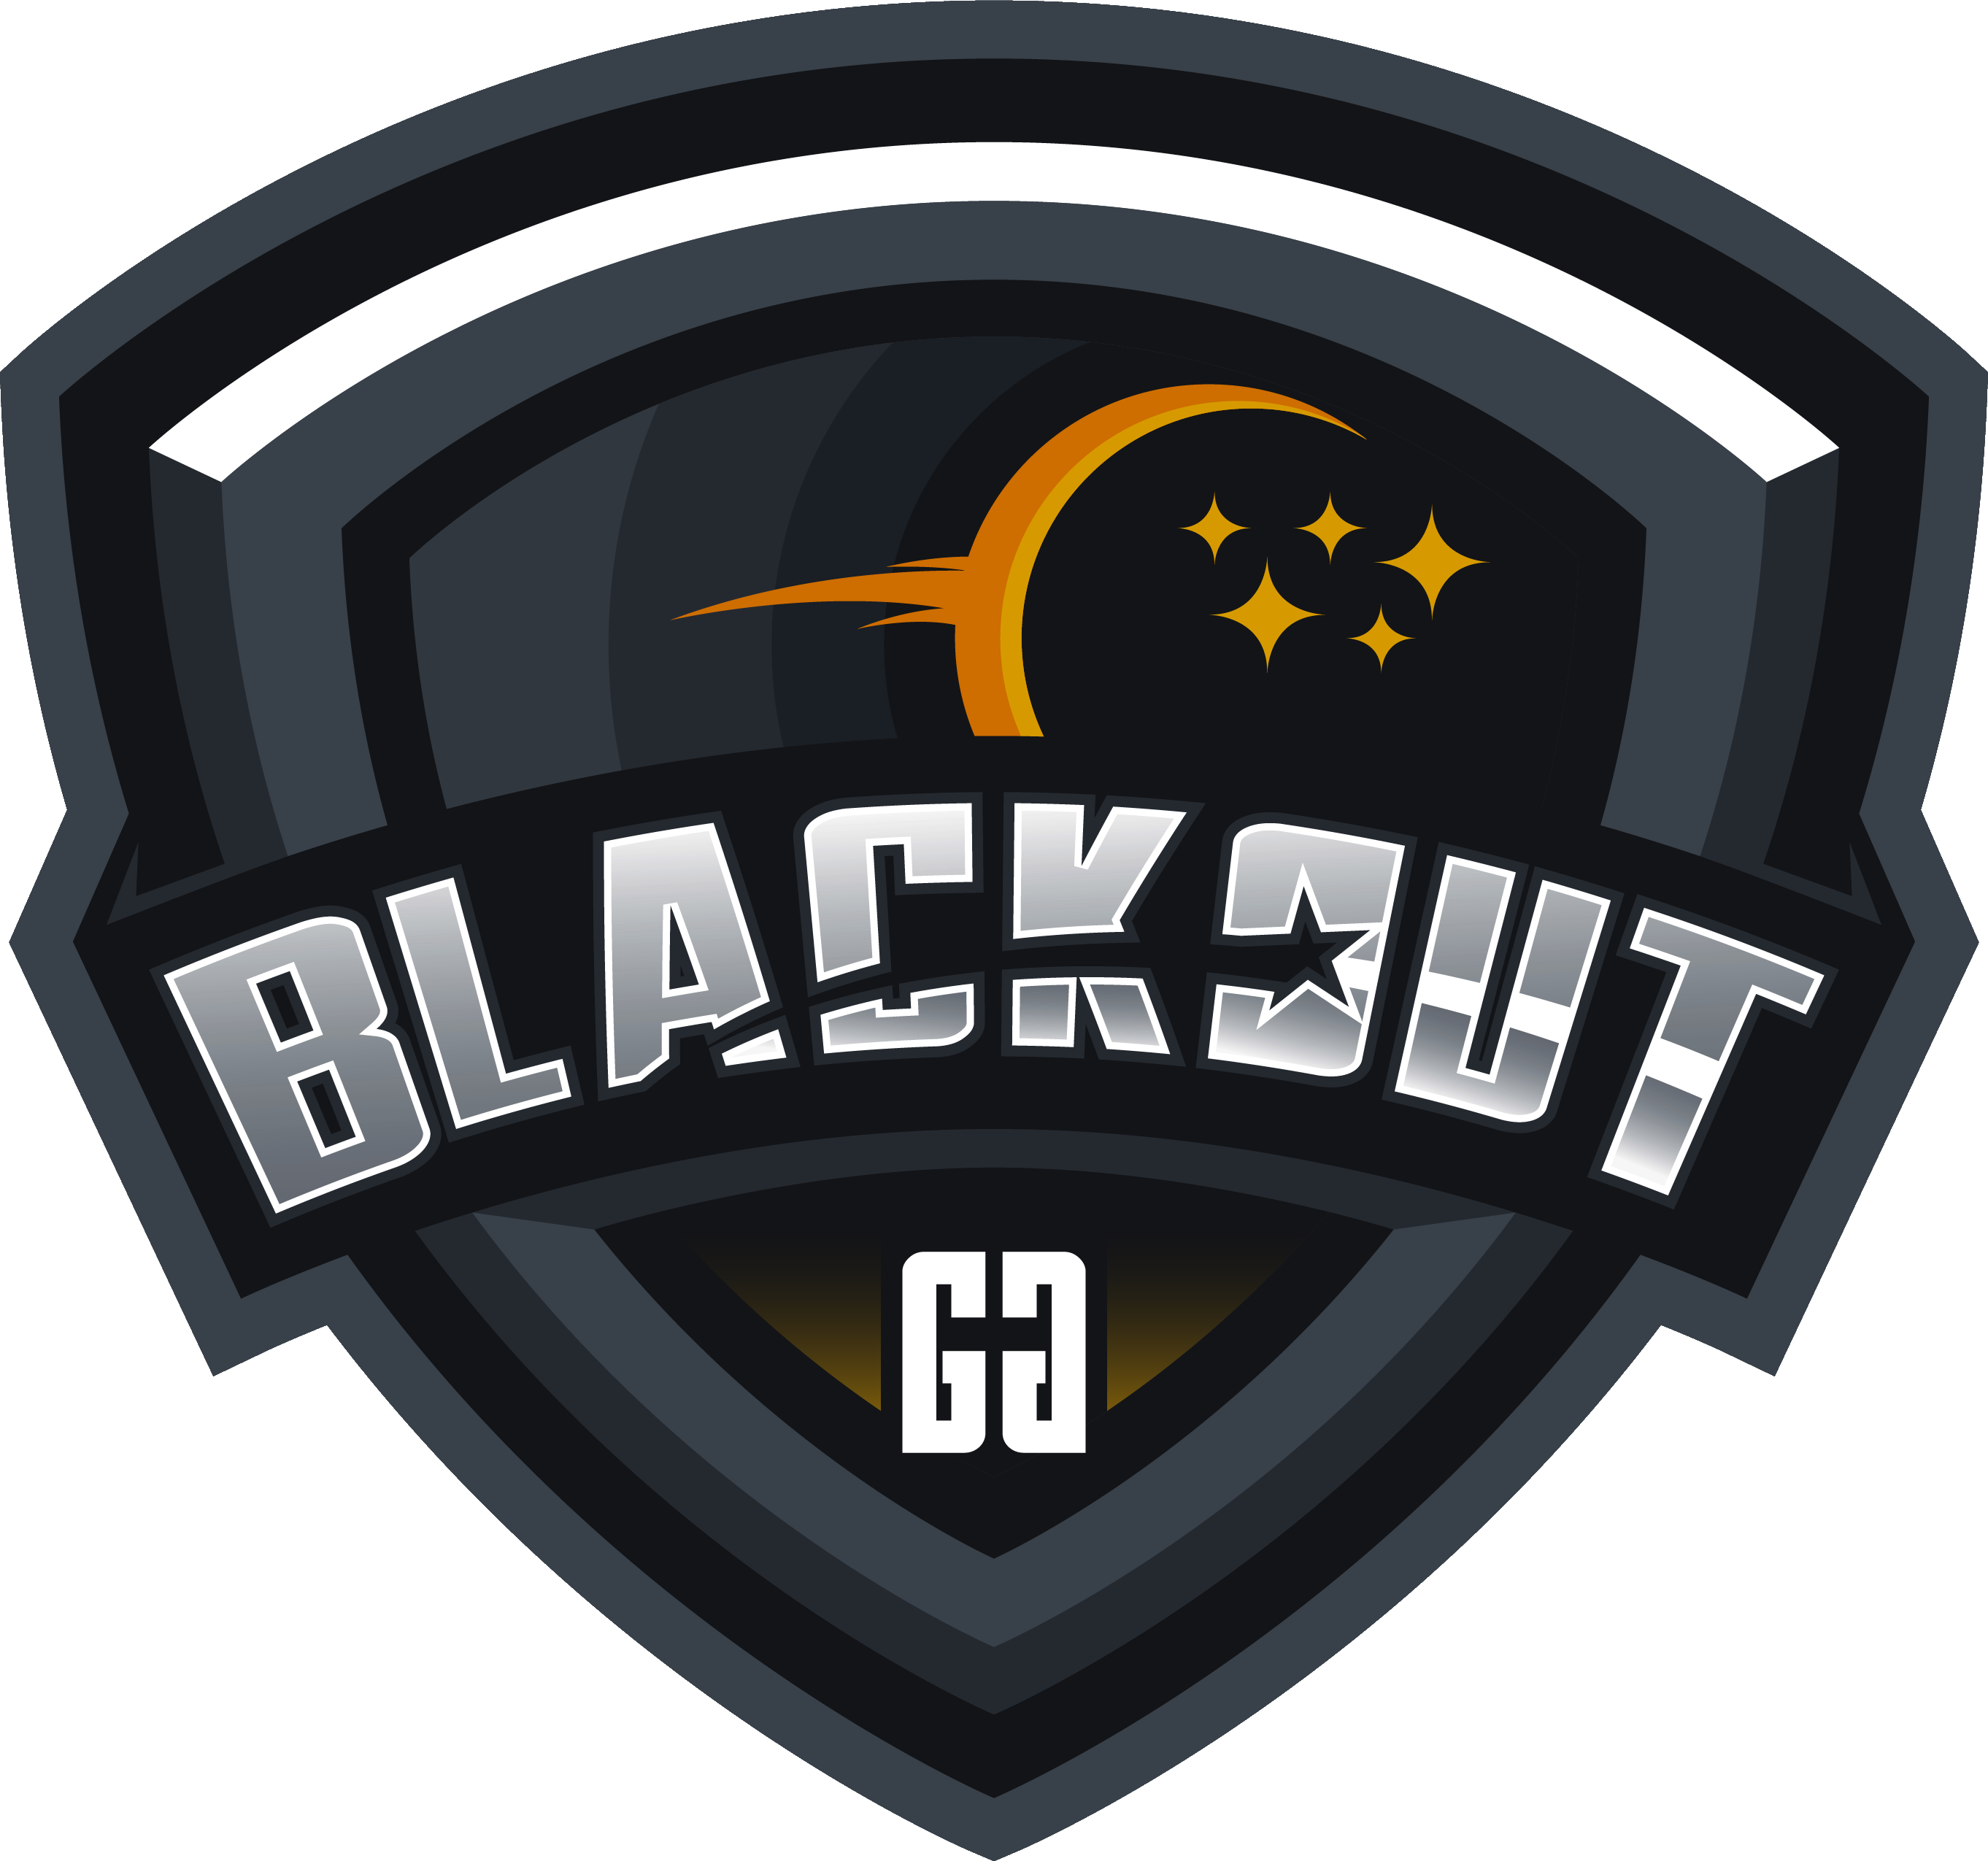 Blackout - Blackout Csgo (2724x2550), Png Download